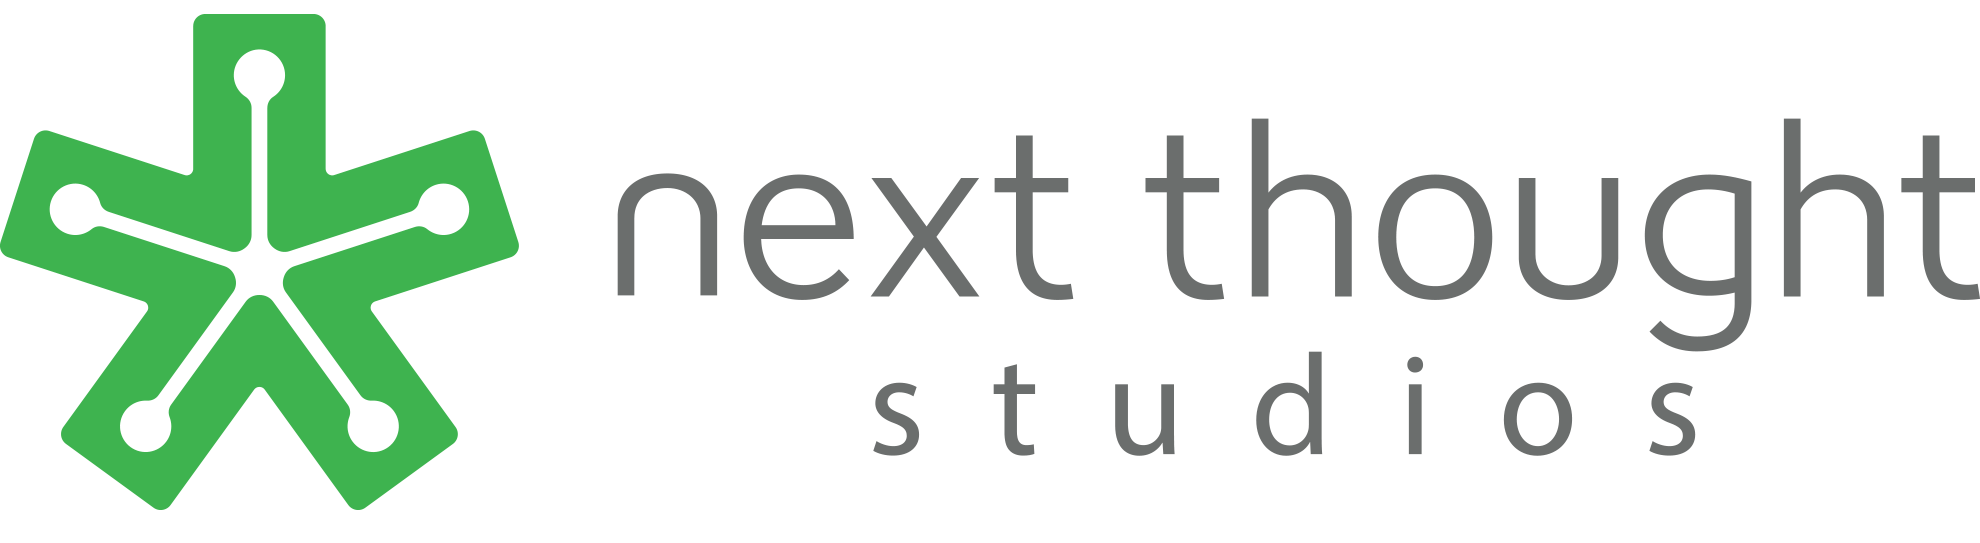 Next Thought Studios Logo